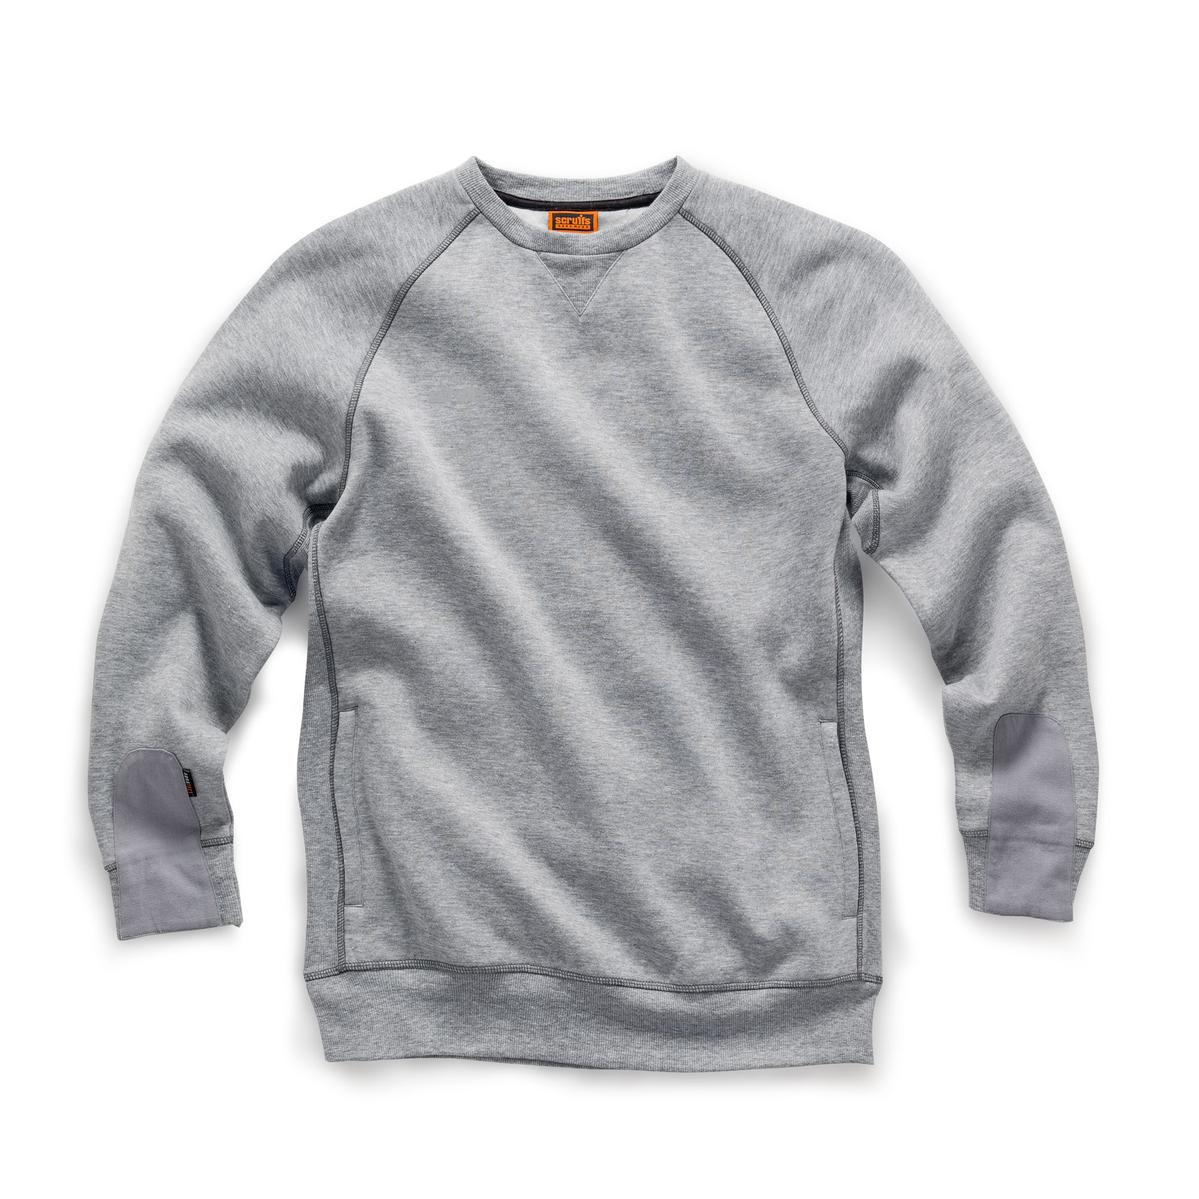 Scruffs Trade Sweatshirt Grey Marl SMALL 